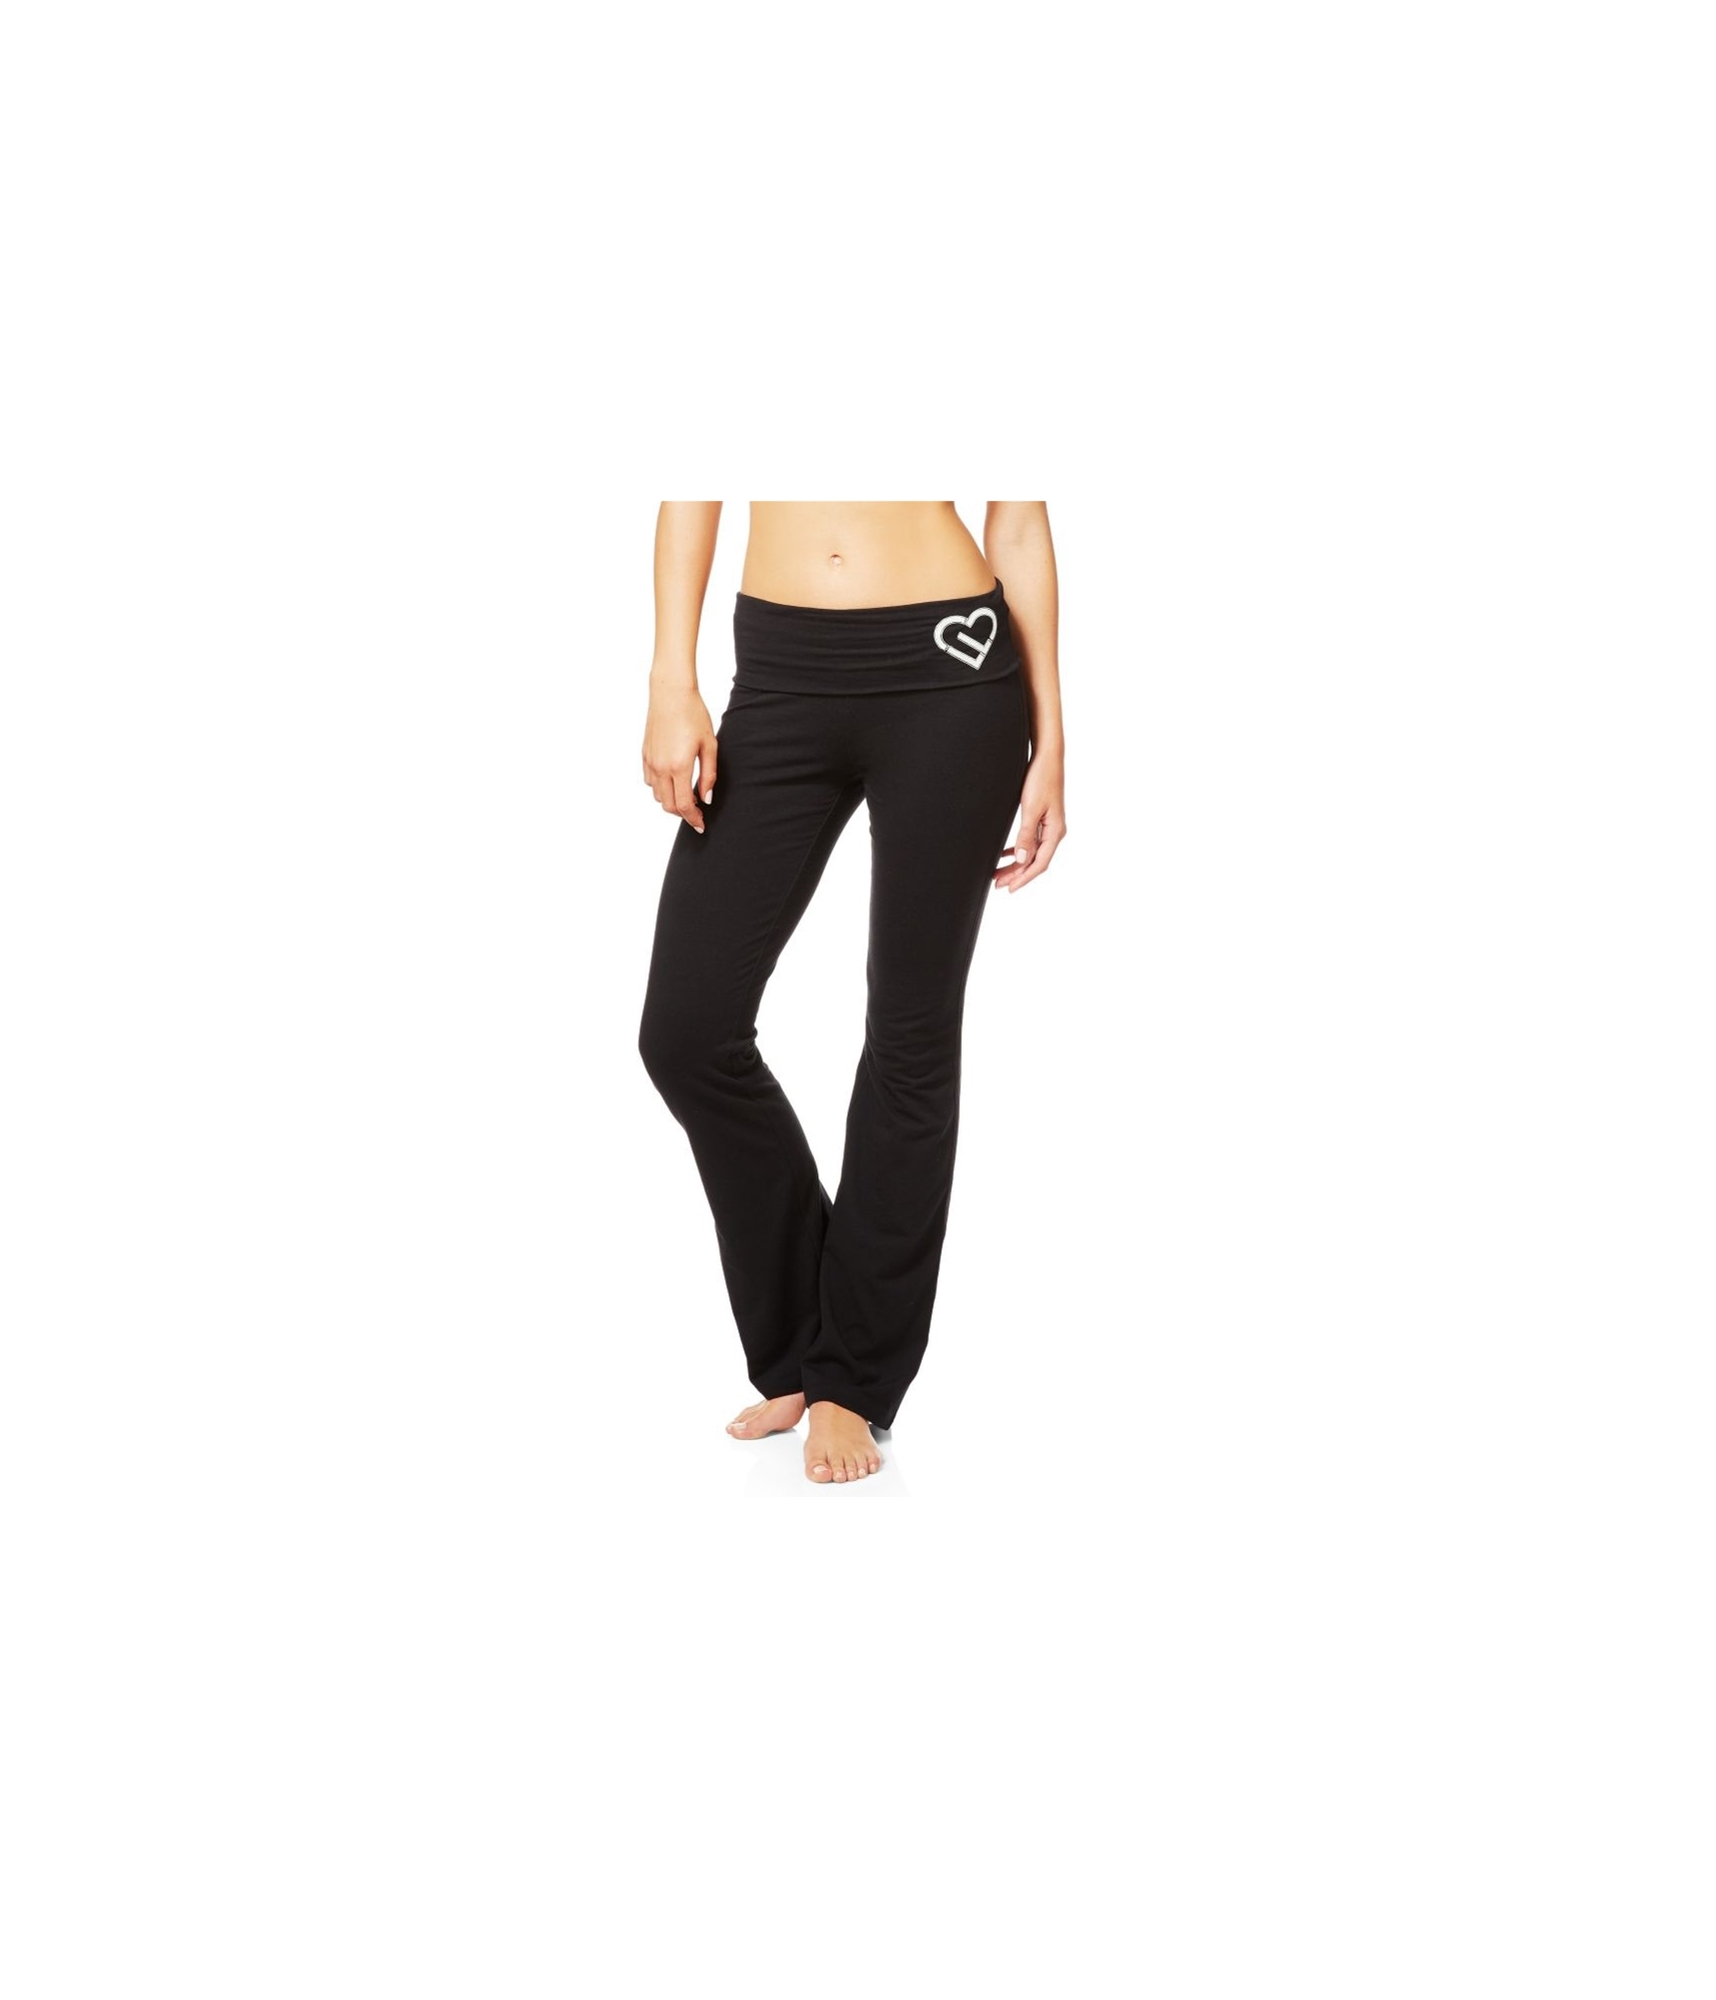 Legging Aeropostale Live Love Dream Bootcut Yoga pants Celana sport Wanita  hitam, Fesyen Wanita, Pakaian Wanita, Bawahan di Carousell